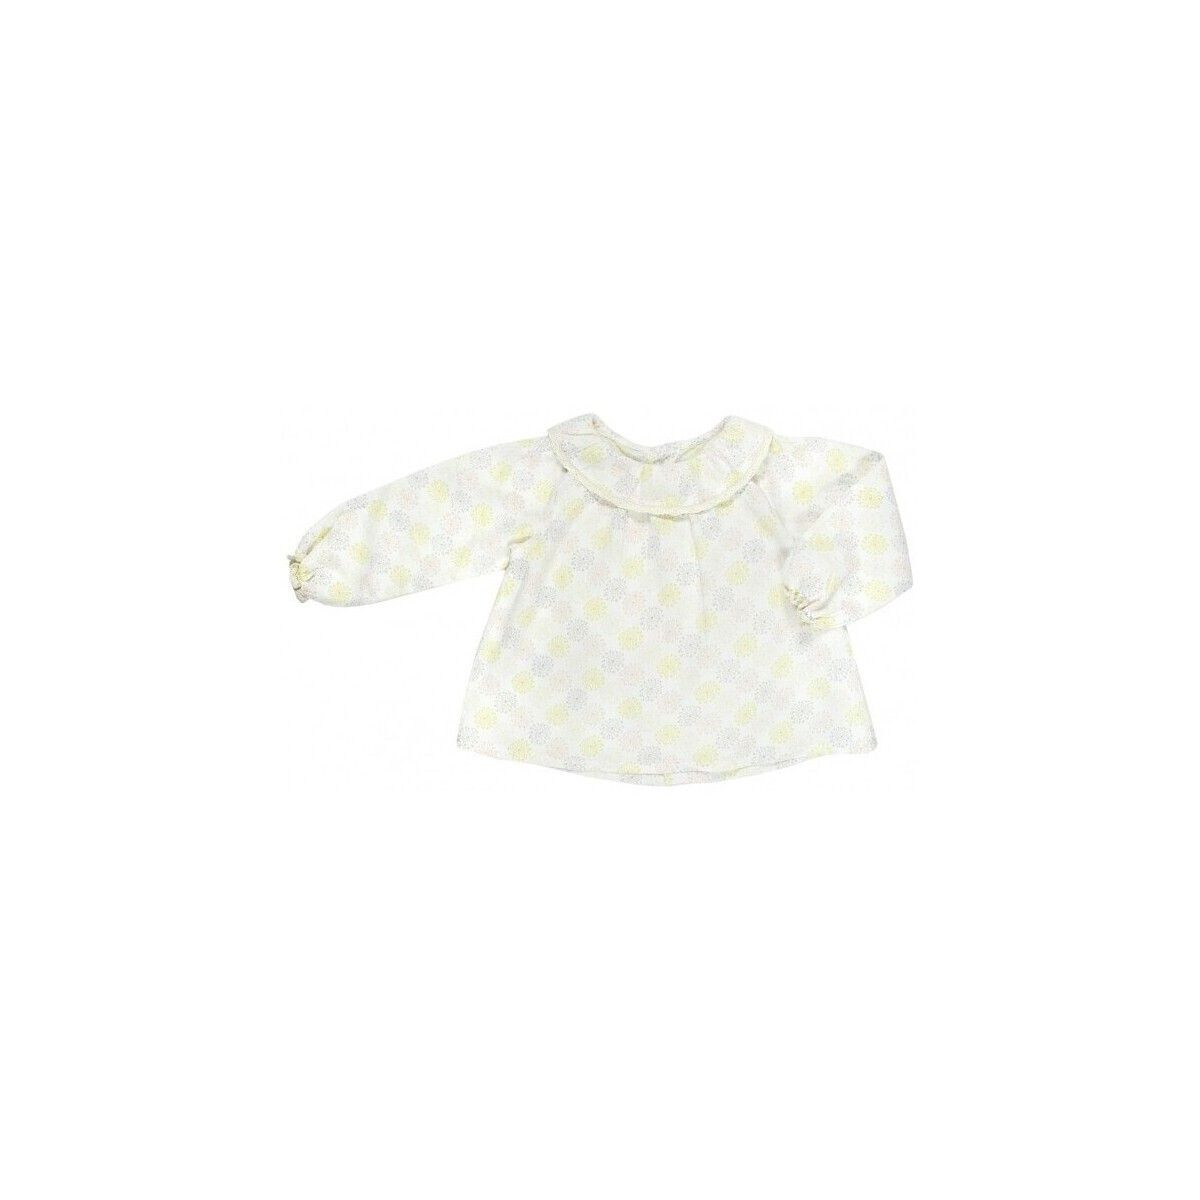 textil Niños Camisas manga larga Bonnet À Pompon 1429601-8-FIRE Blanco